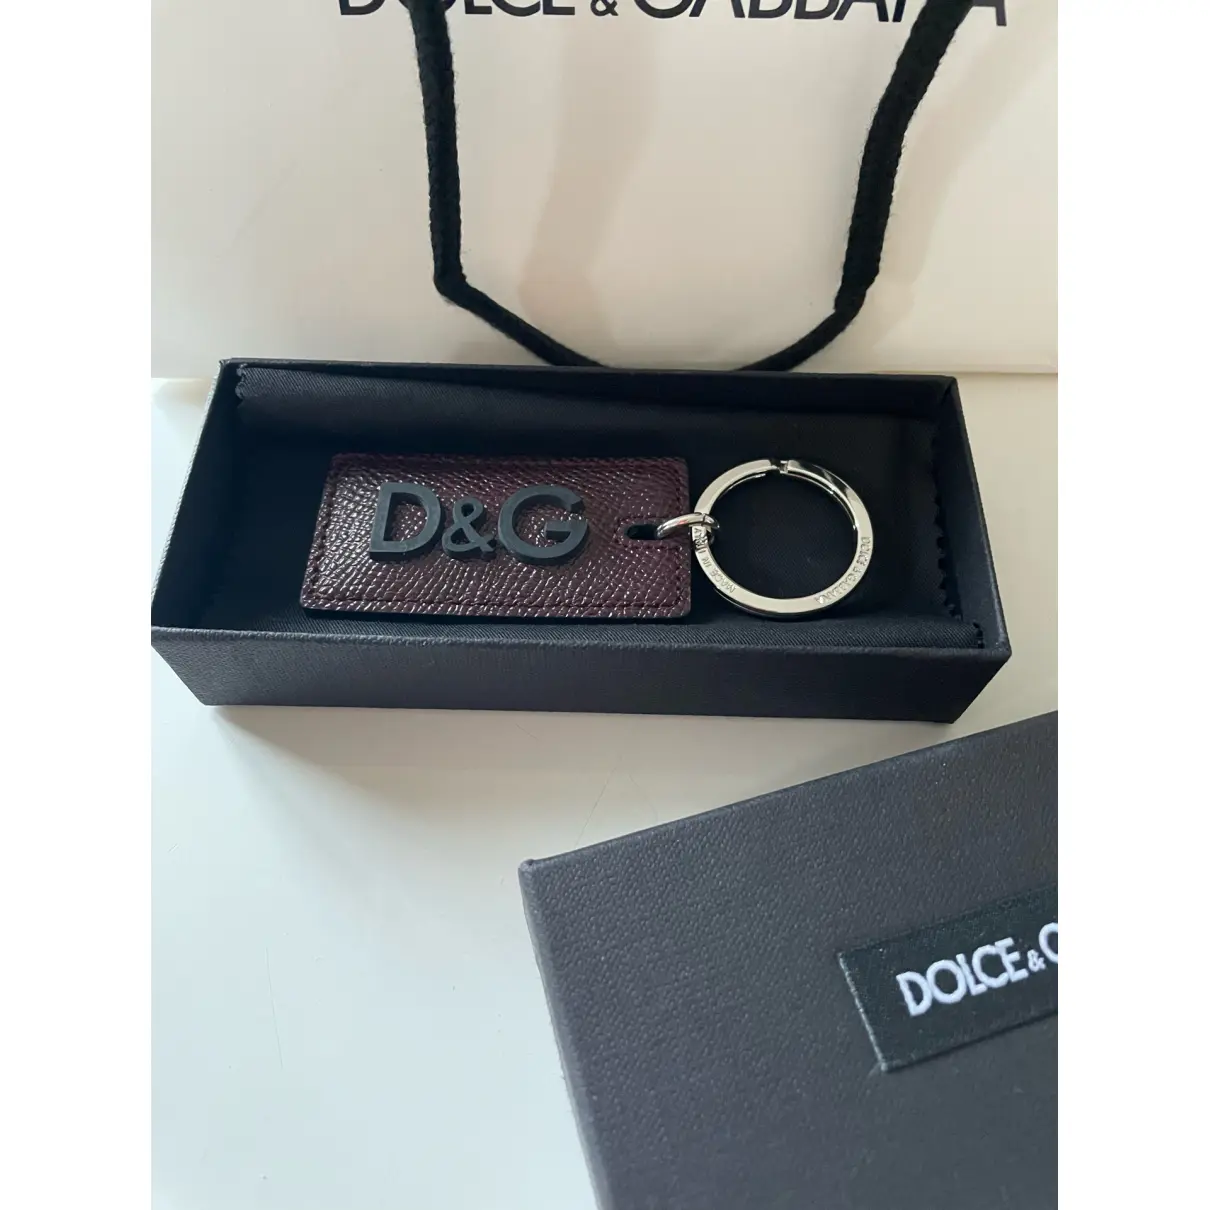 Buy D&G Leather jewellery online